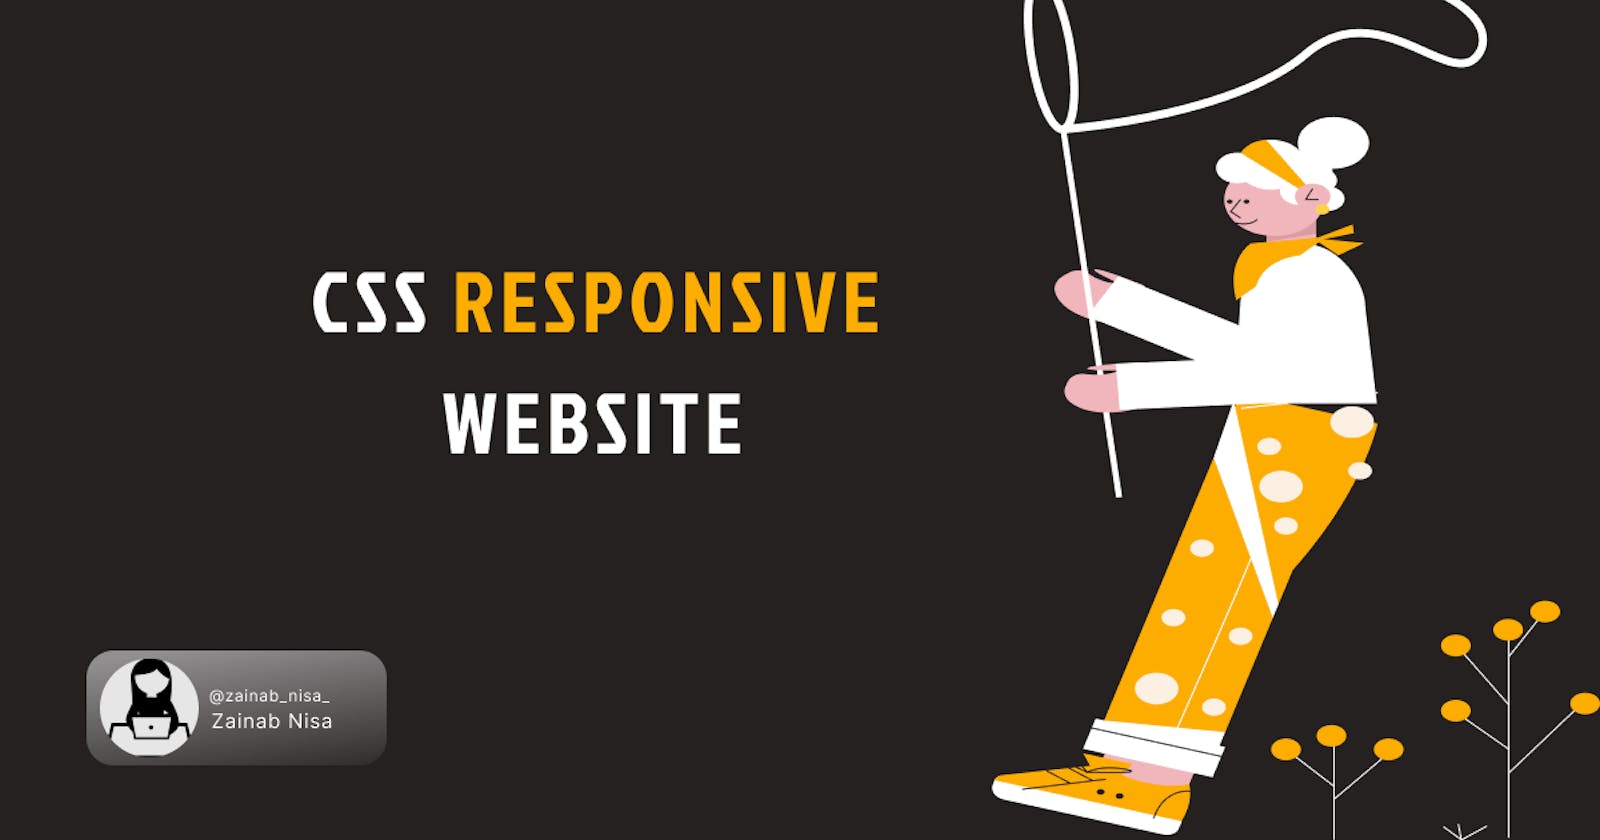 CSS Responsive Website tips & tricks